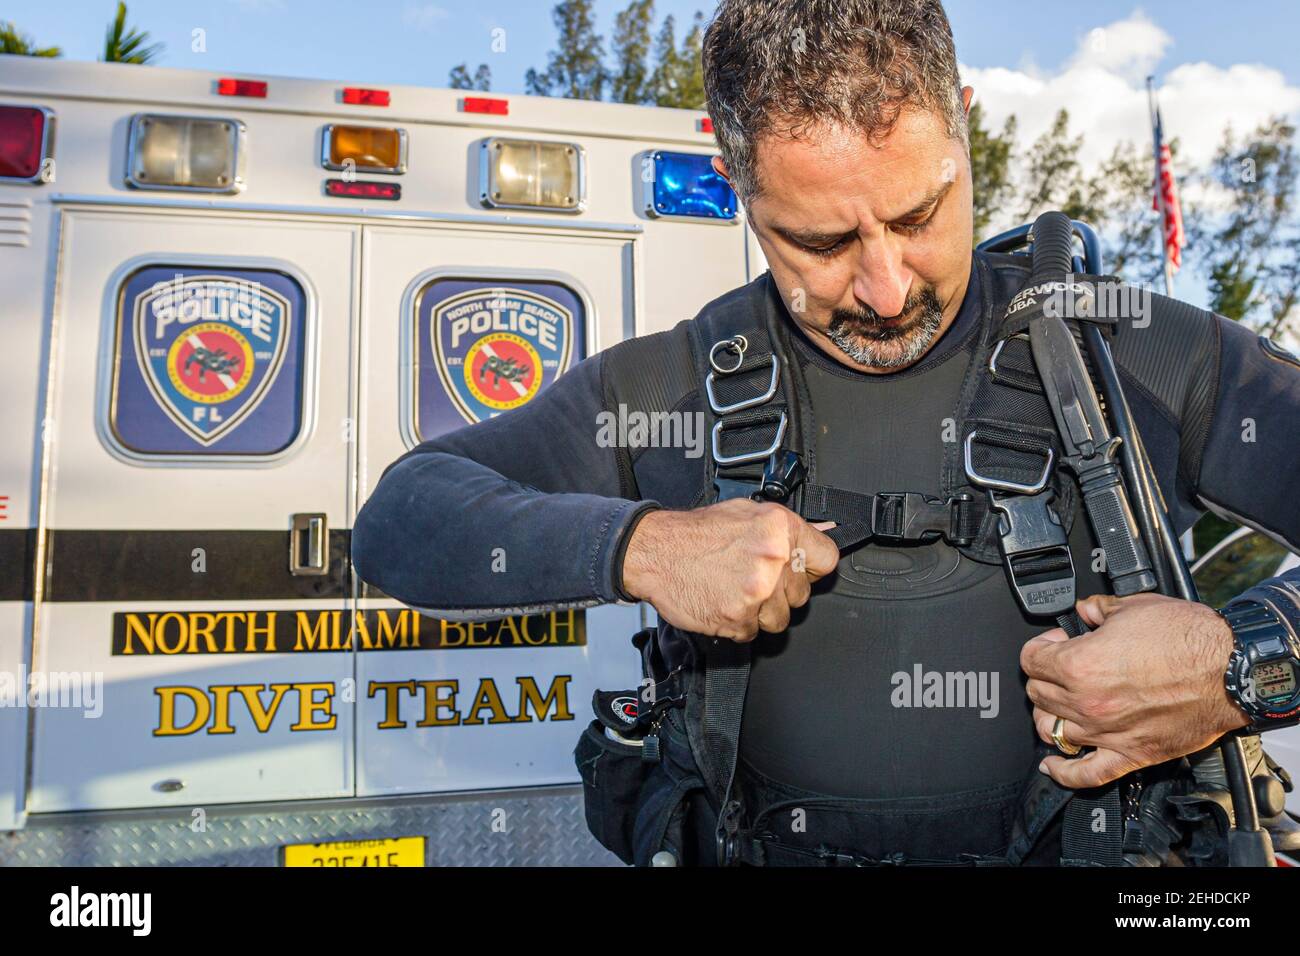 North Miami Beach Florida,Police Department,dive team member policeman diving equipment, Stock Photo